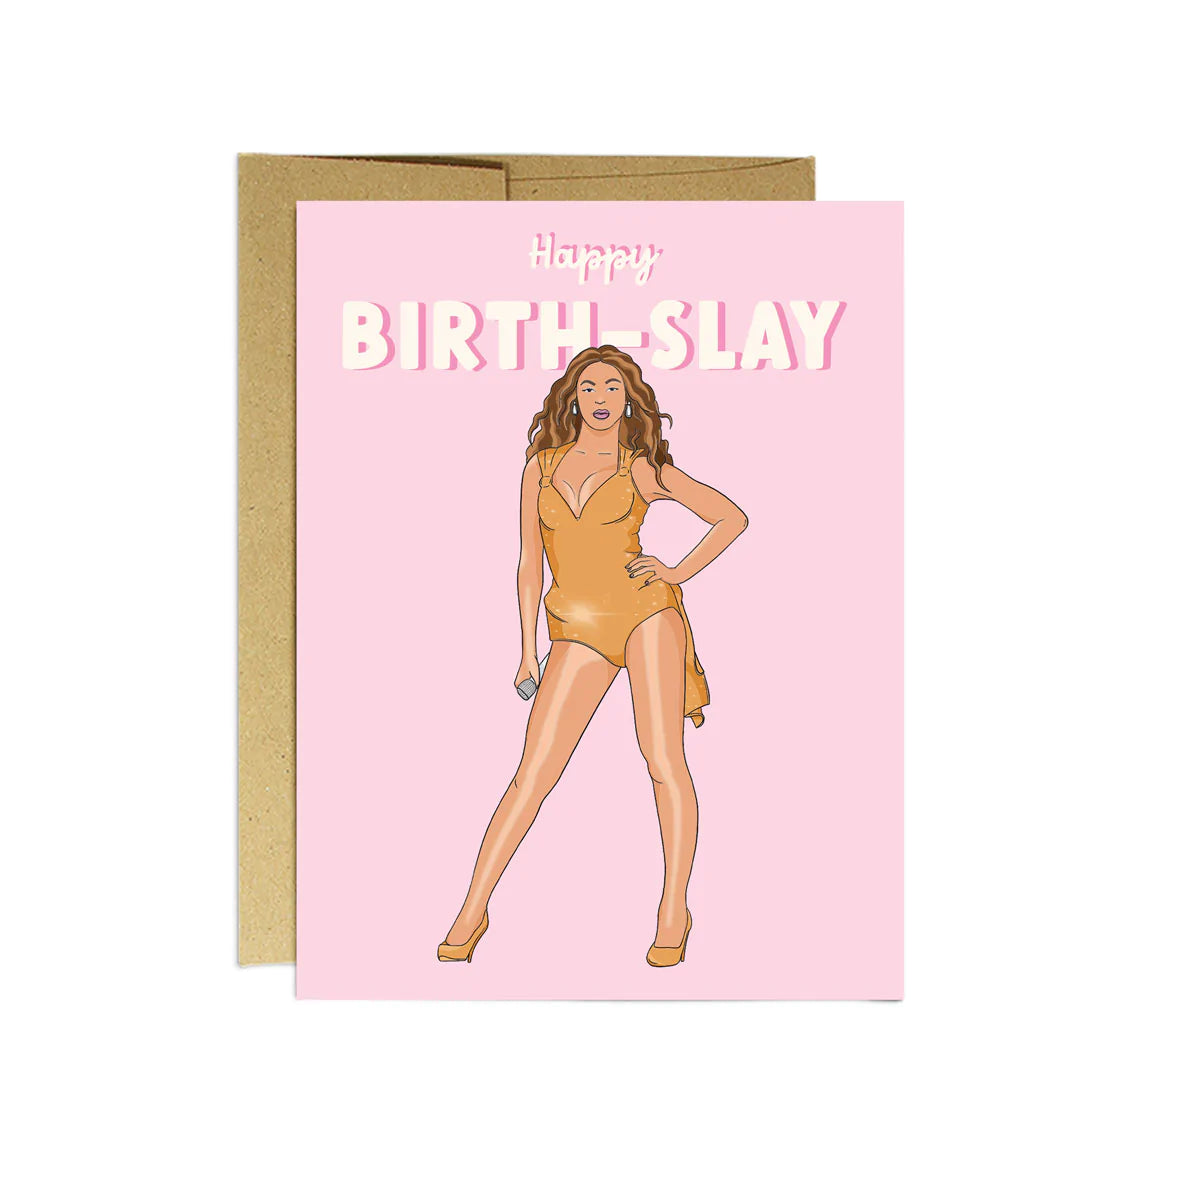 Happy Birth-slay Beyonce Birthday Card